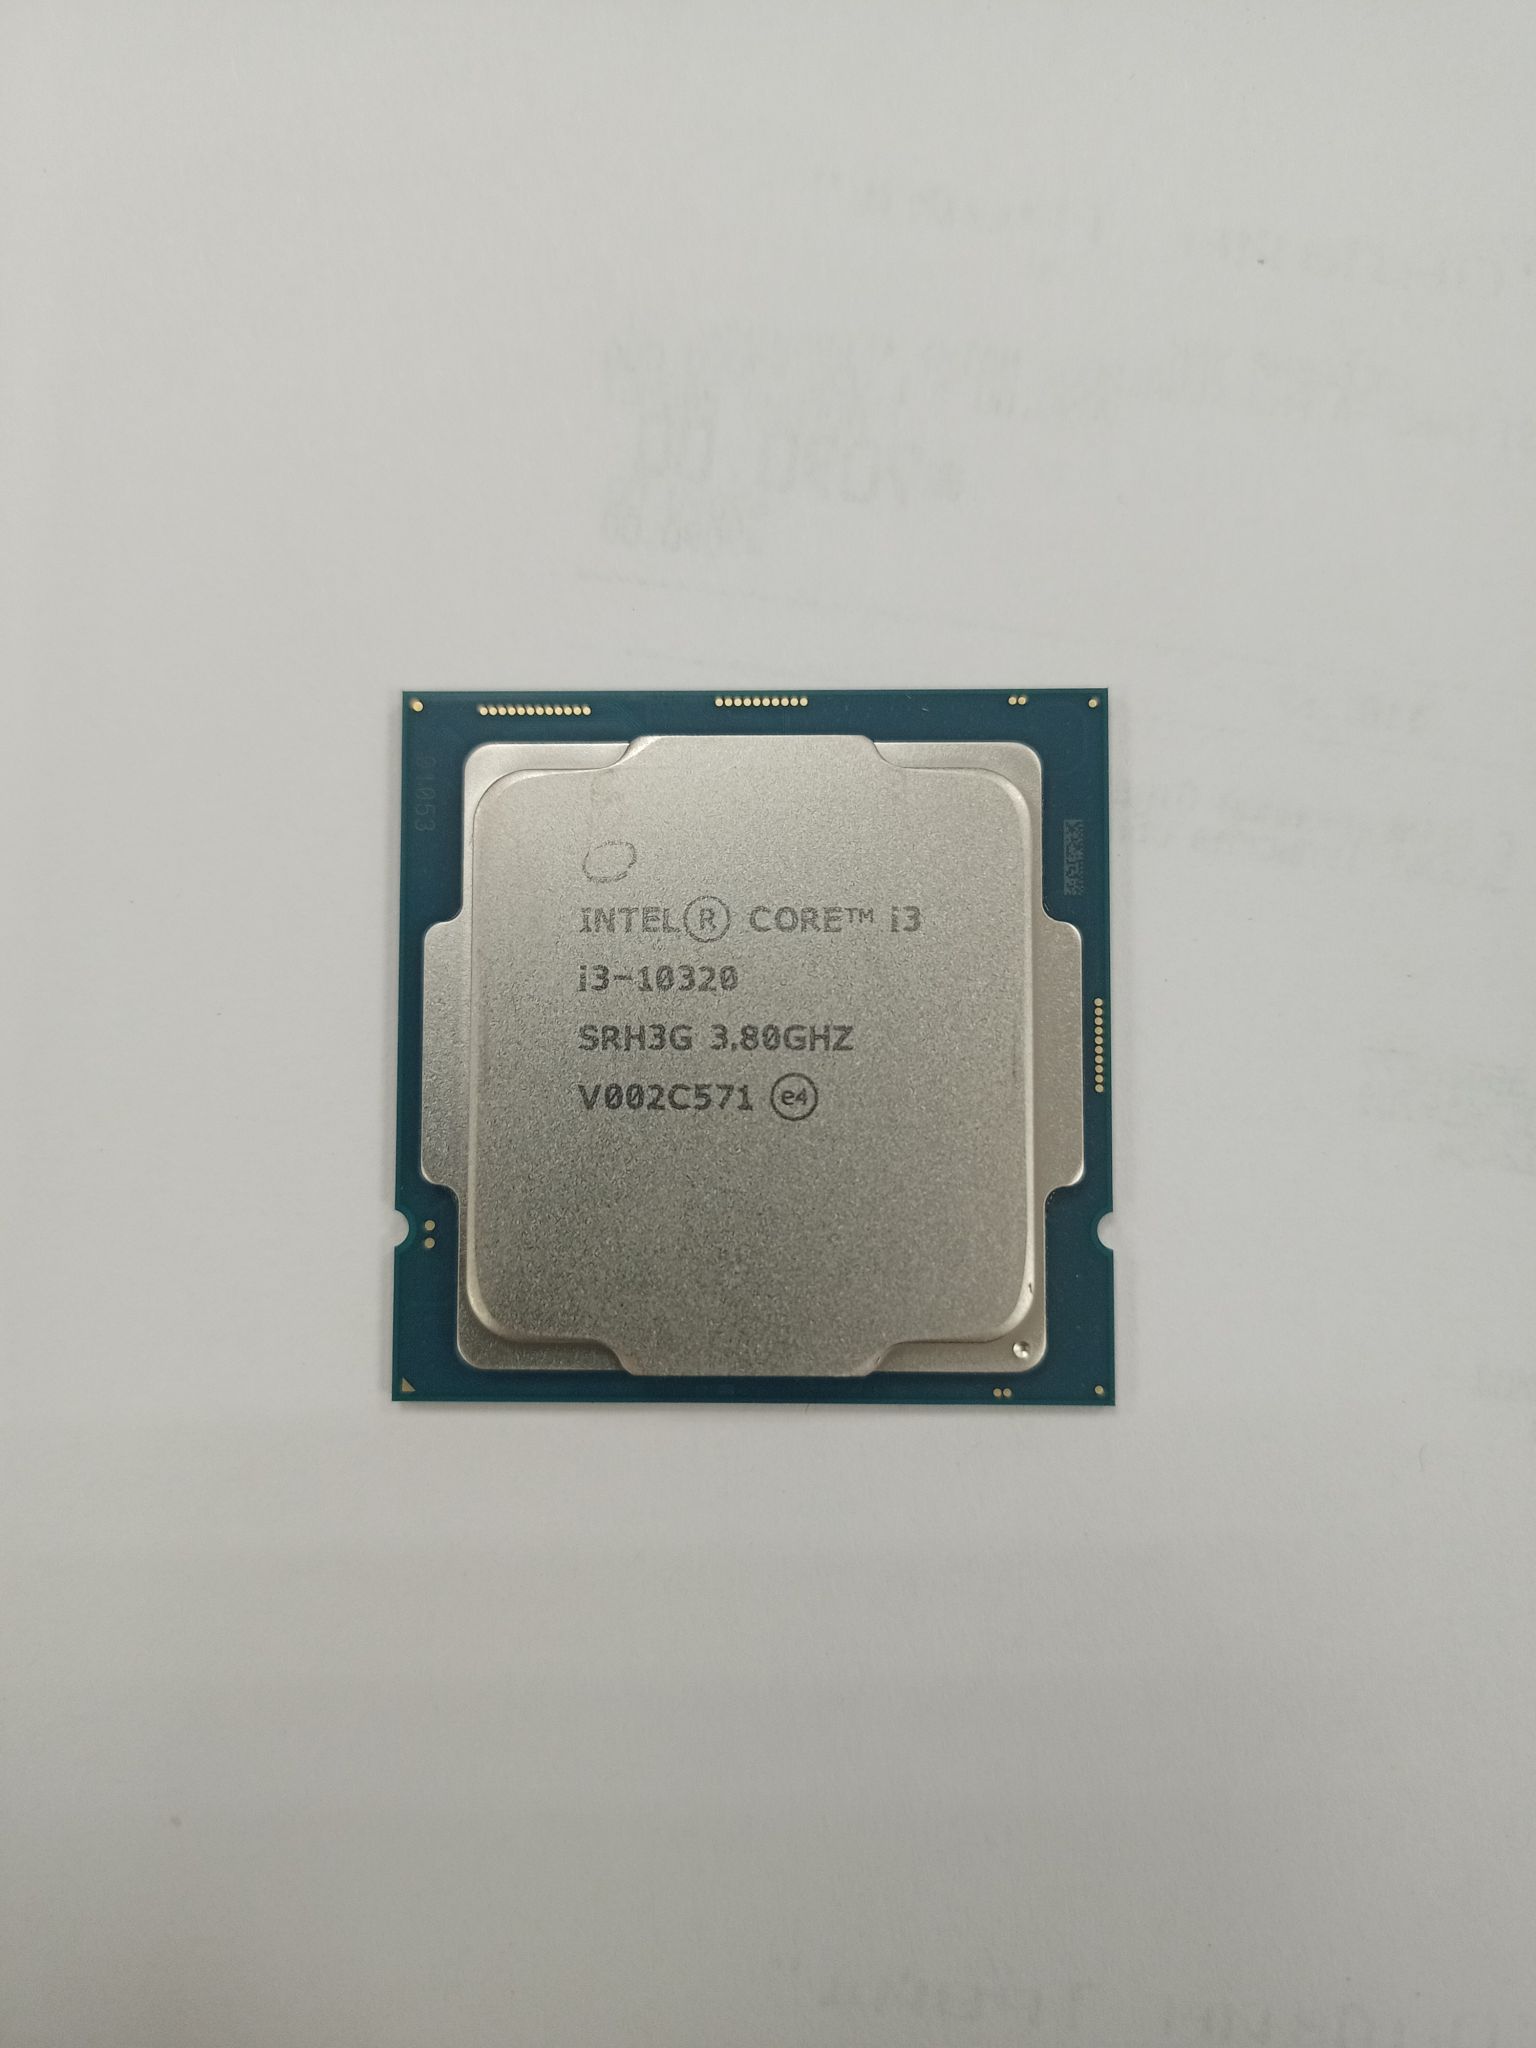 Intel core i5 10400f 2.9 ггц. Intel Core i5-7400. Процессор Intel i5 7400 процессор. Intel Core i5 7400 3.00GHZ. Intel Core i5 7400 сокет.